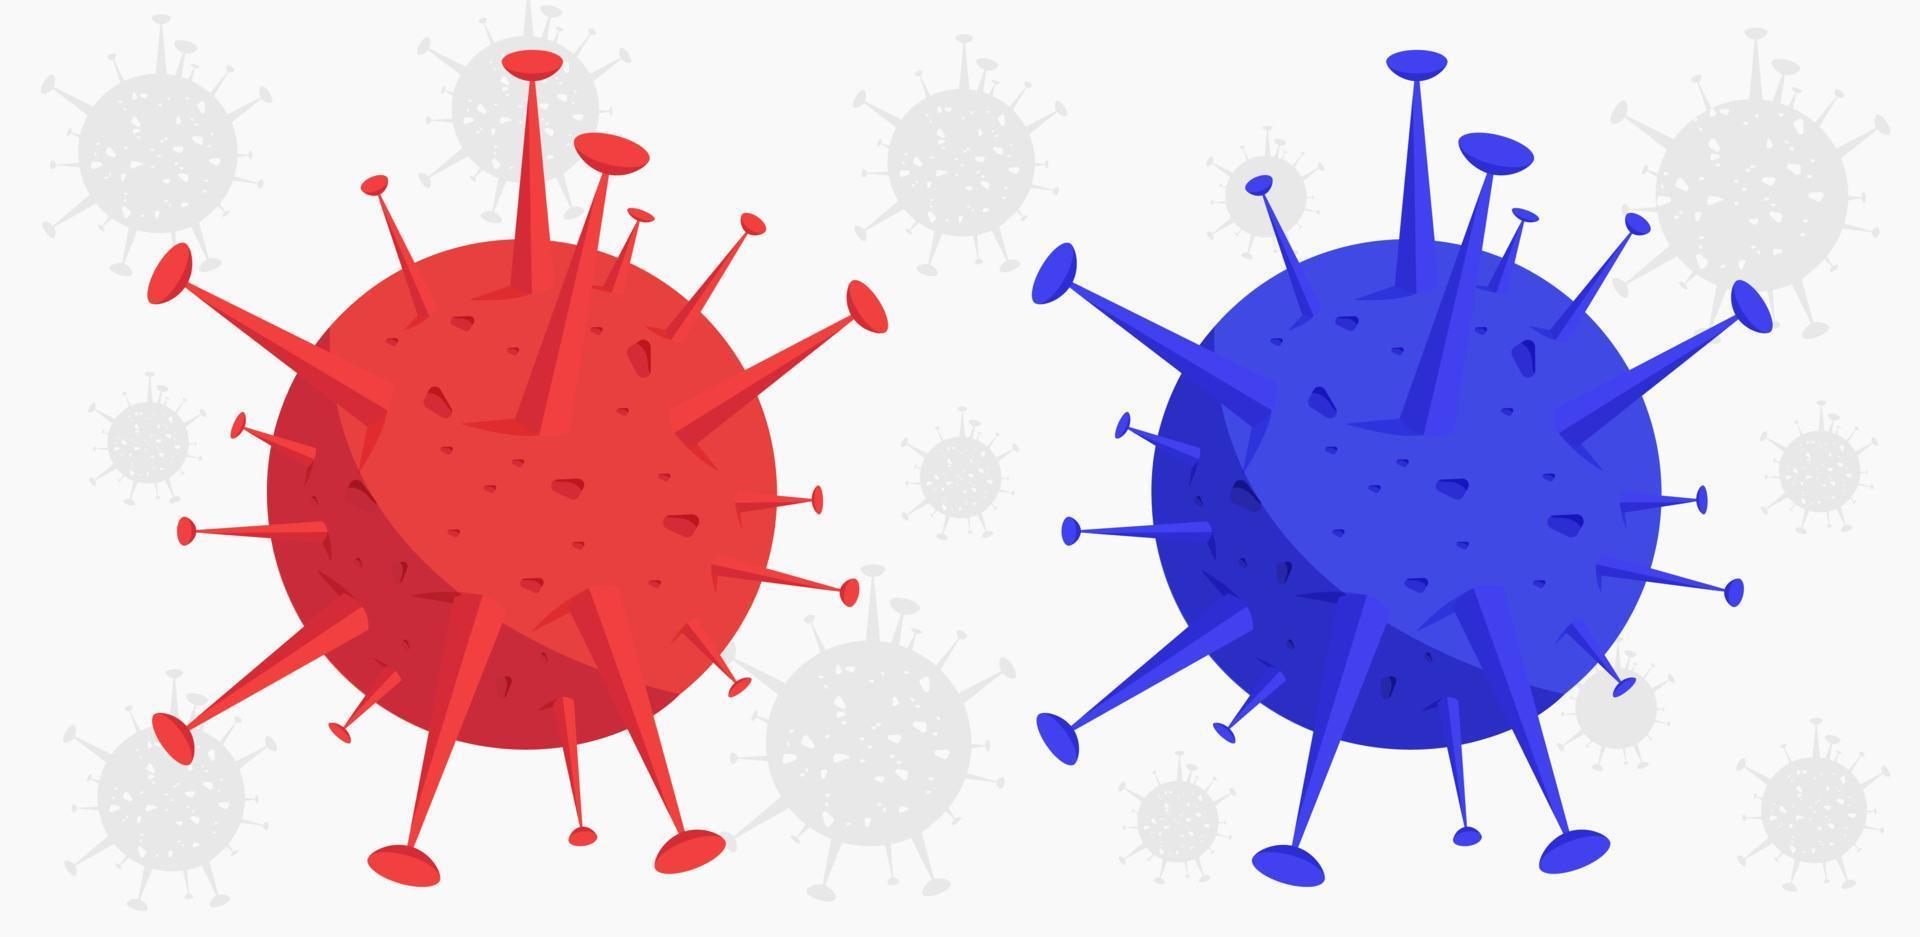 Covid19 coronavirus red virus cell concept vector